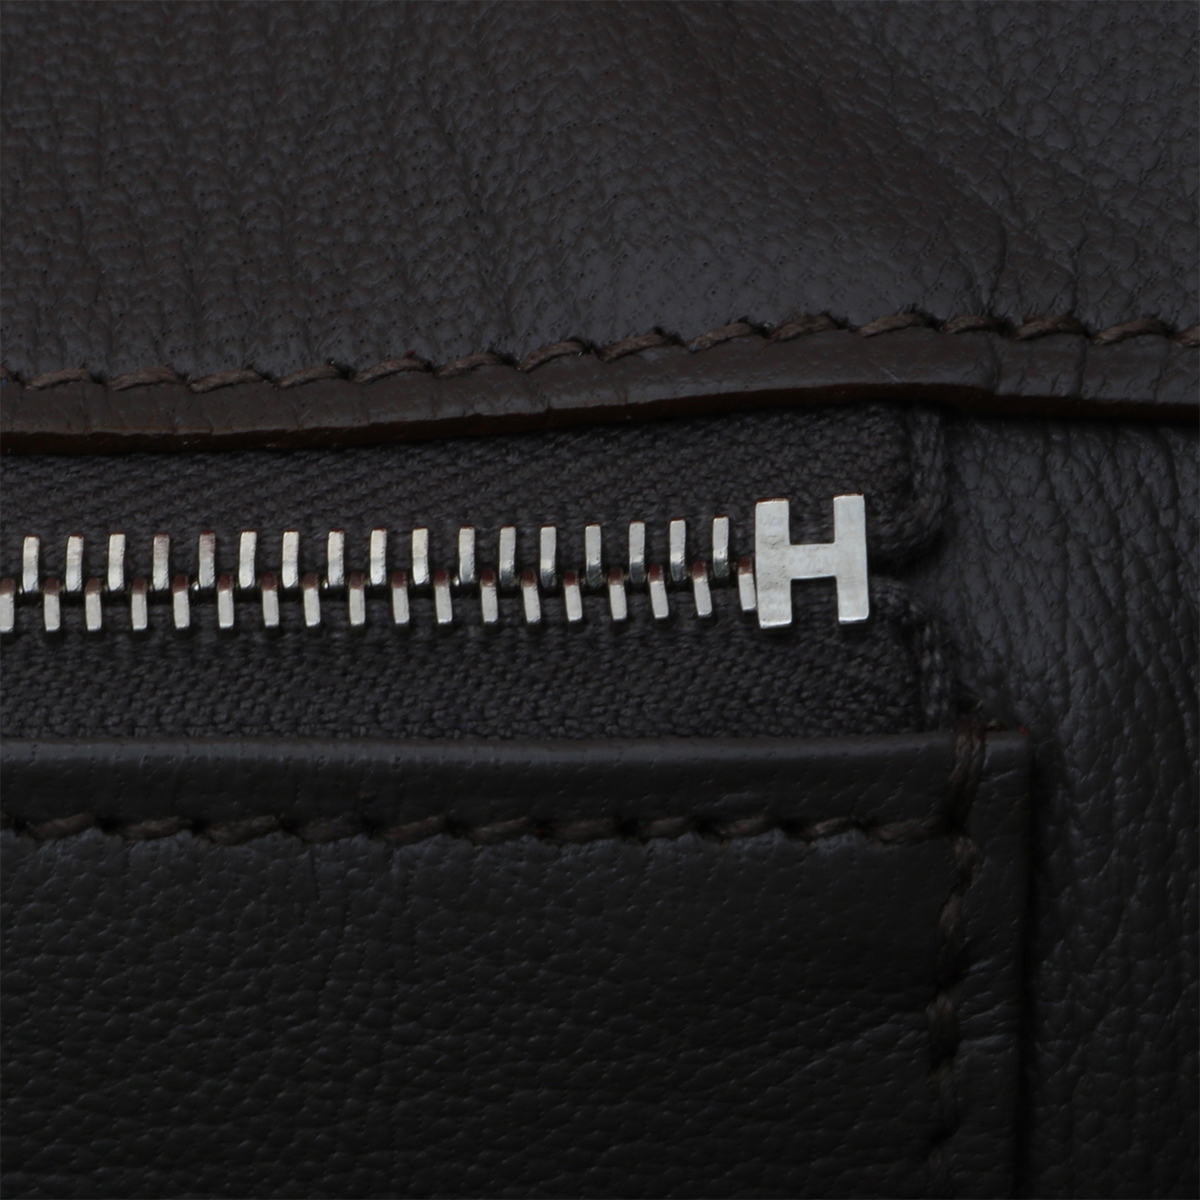 Hermès Birkin 35cm Special Order HSS Rouge Pivoine/ Etain Epsom Leather  Brushed Palladium Hardware Stamp P 2012 - BoutiQi Bags